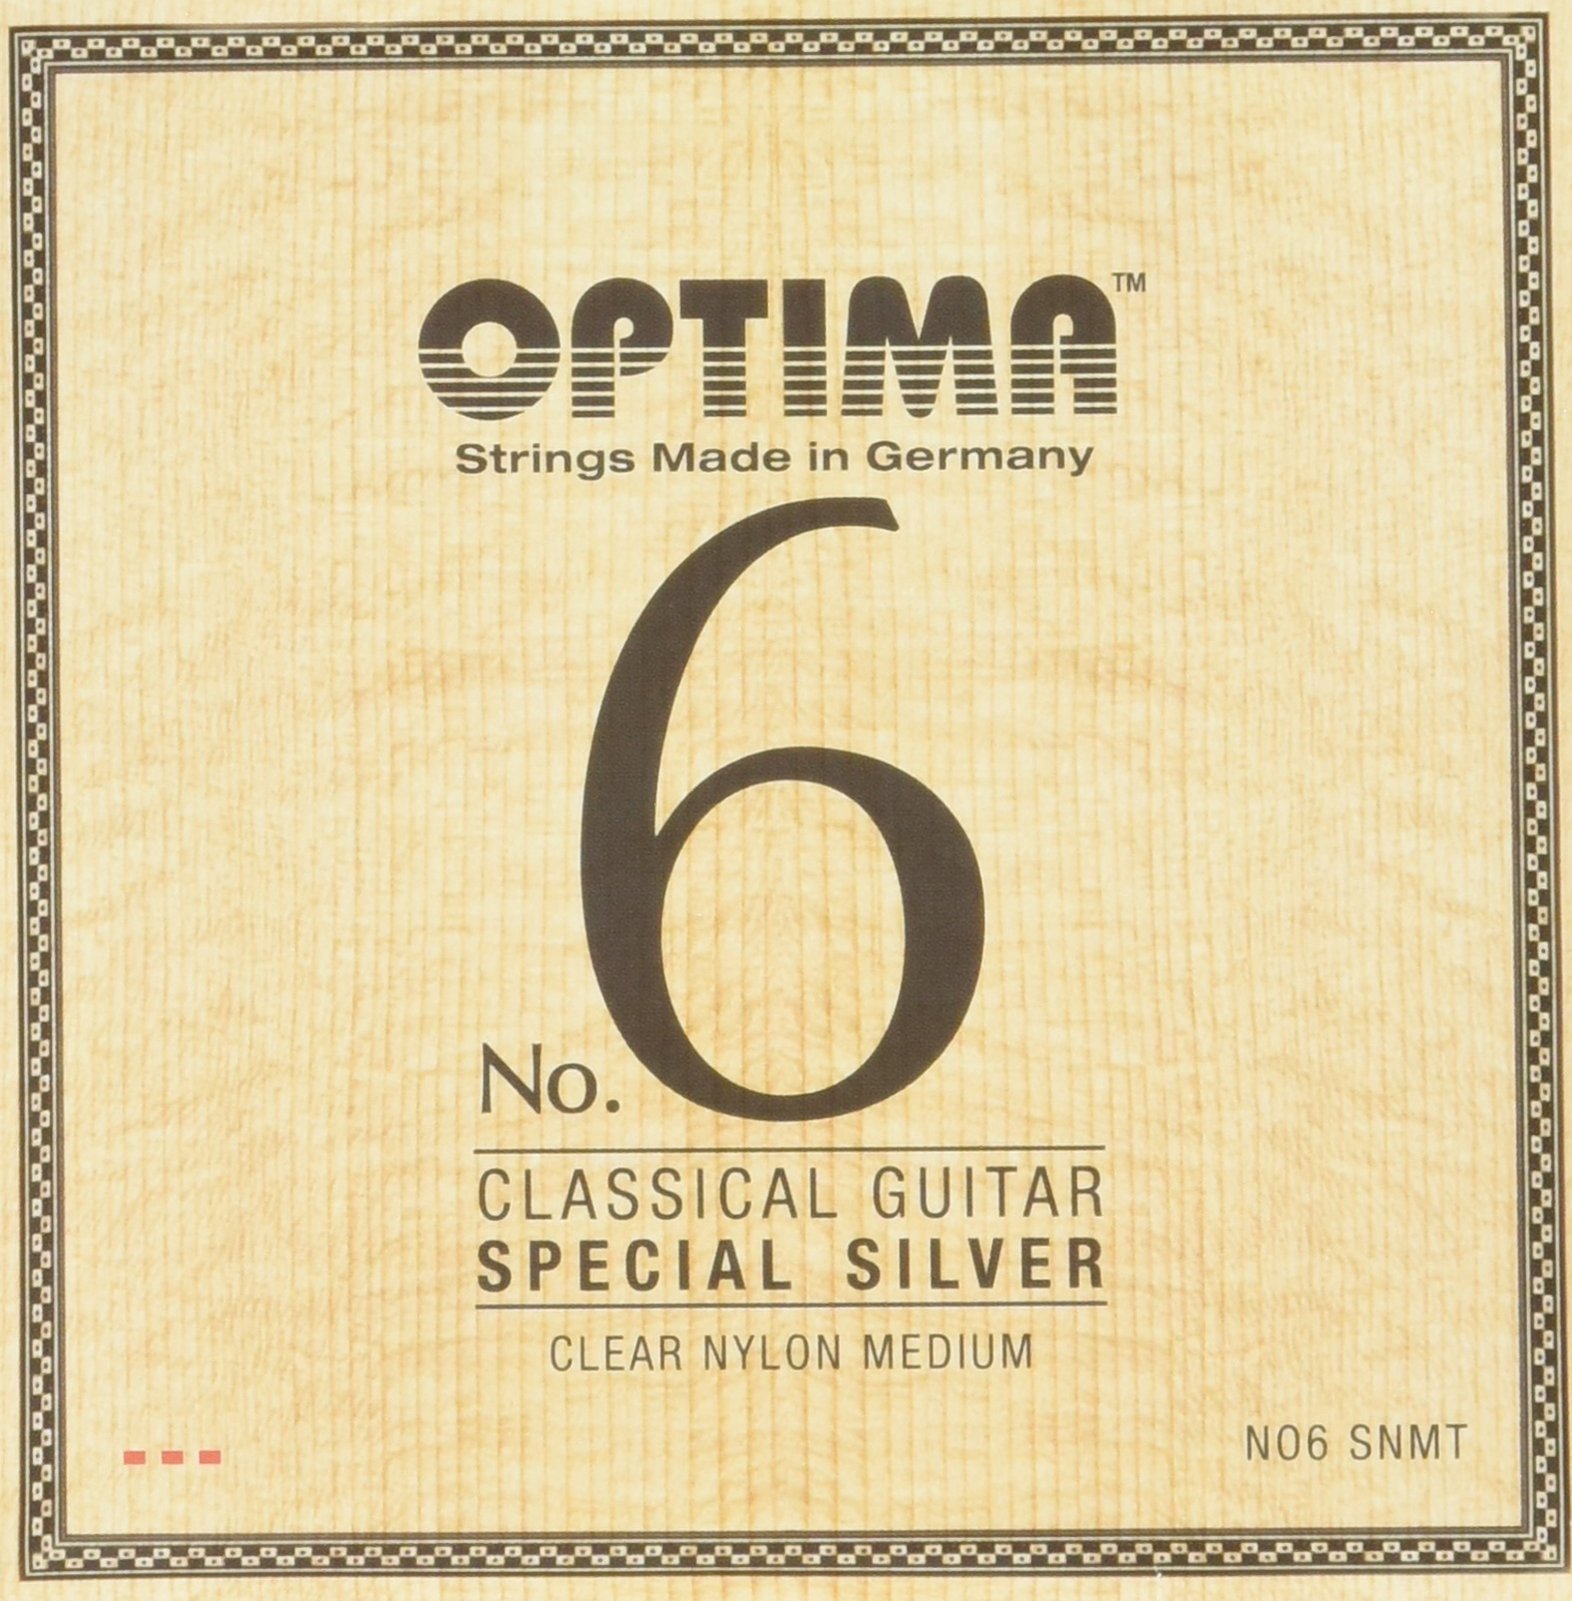 Klassikgitarre-Saiten Satz No. 6 Special Silver Nylon medium NO6.SNMT